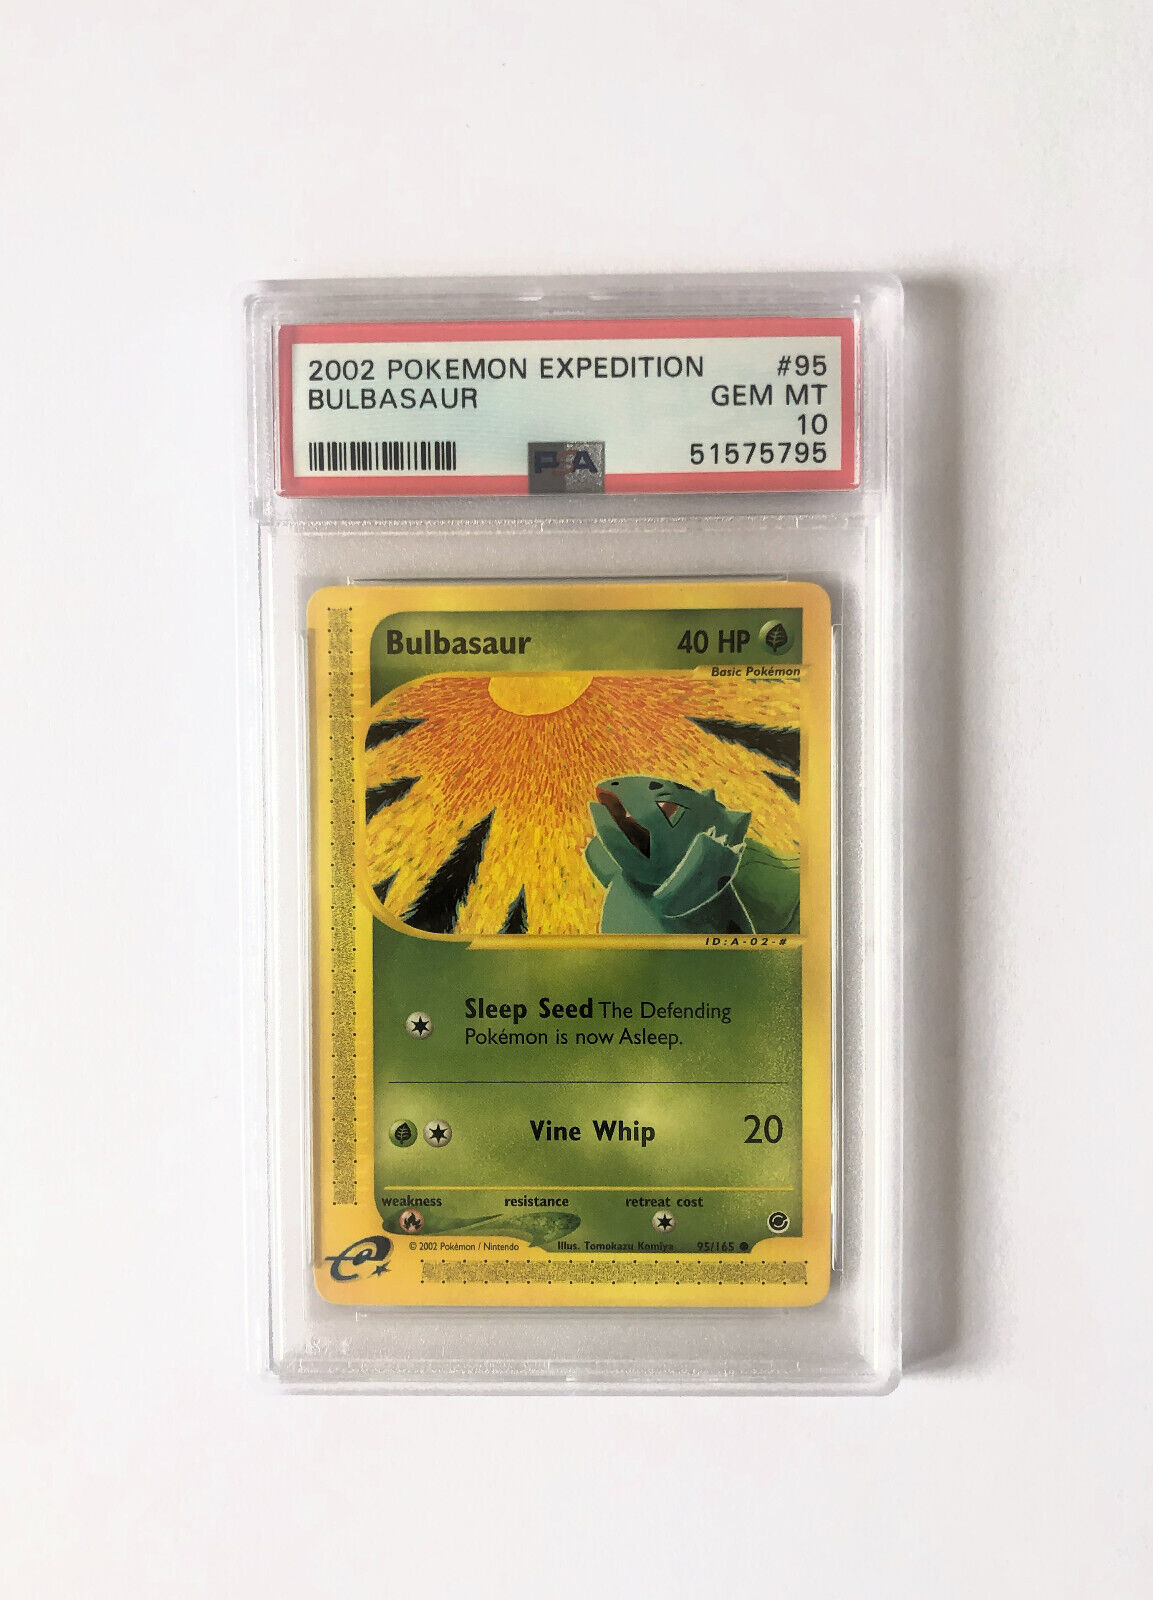 2002 PSA 10 Pokemon Bulbasaur Expedition 95/165 Gem Mint